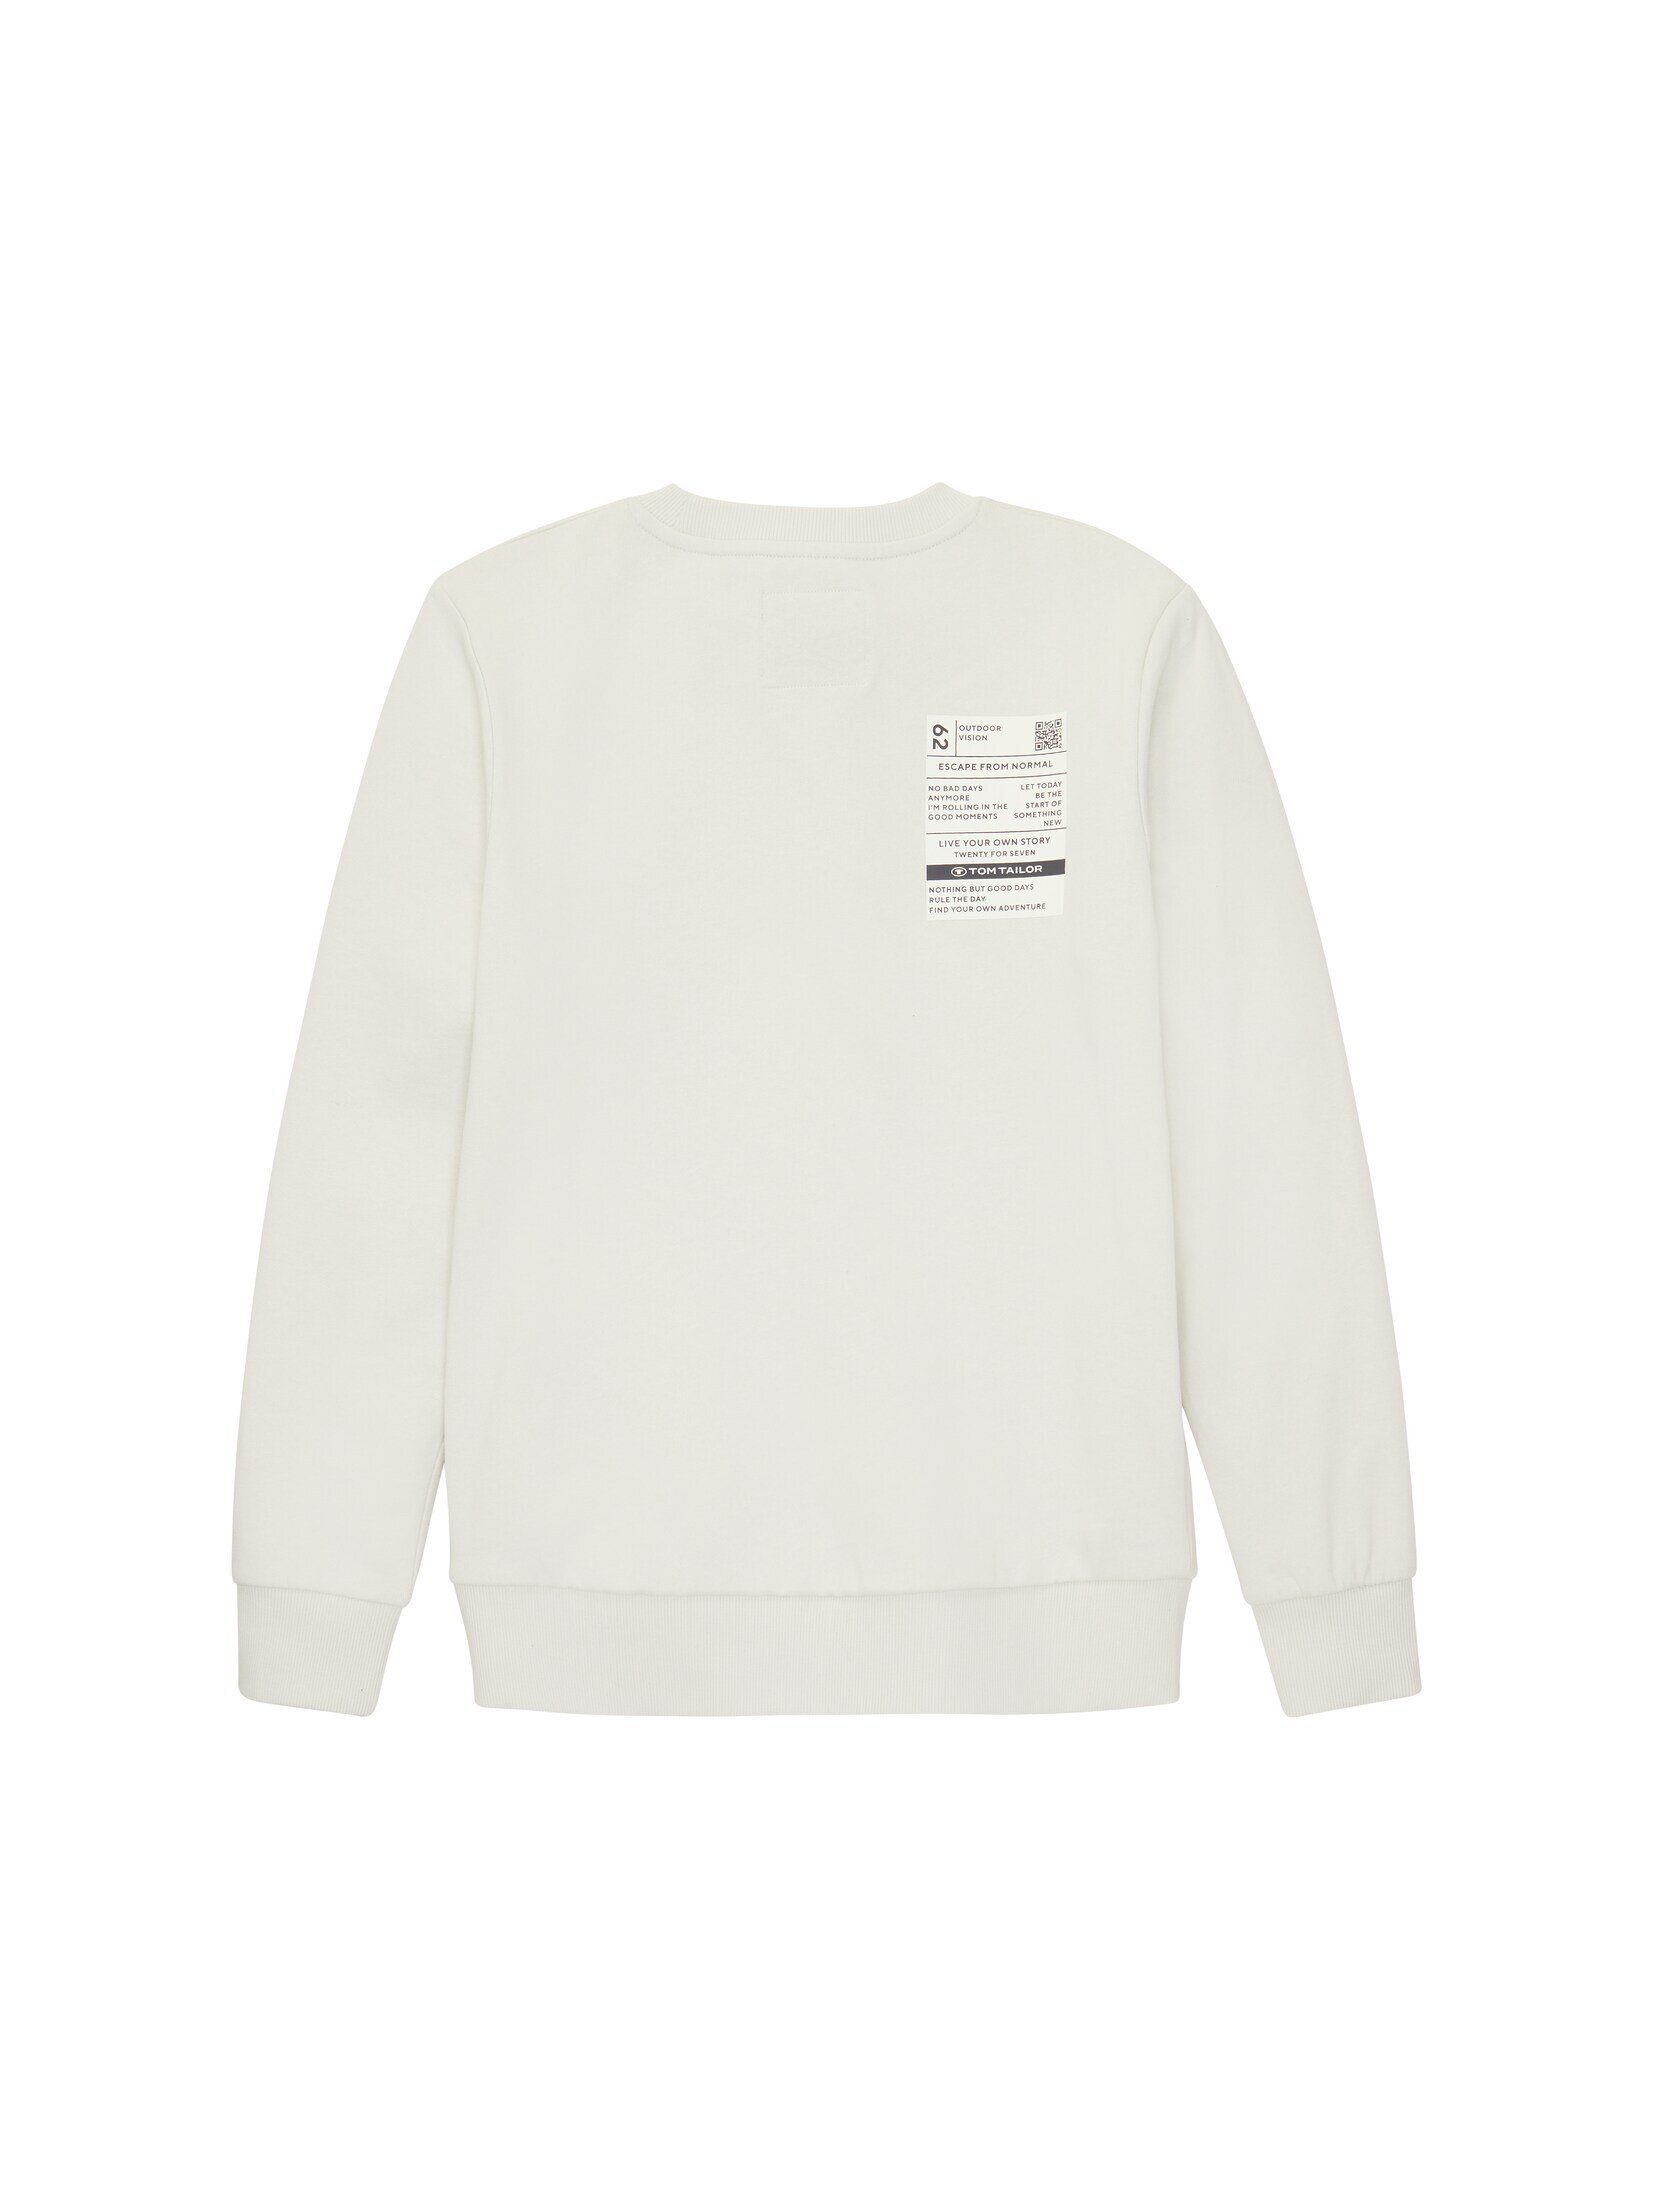 TOM TAILOR Hoodie Sweatshirt mit Print greyish white